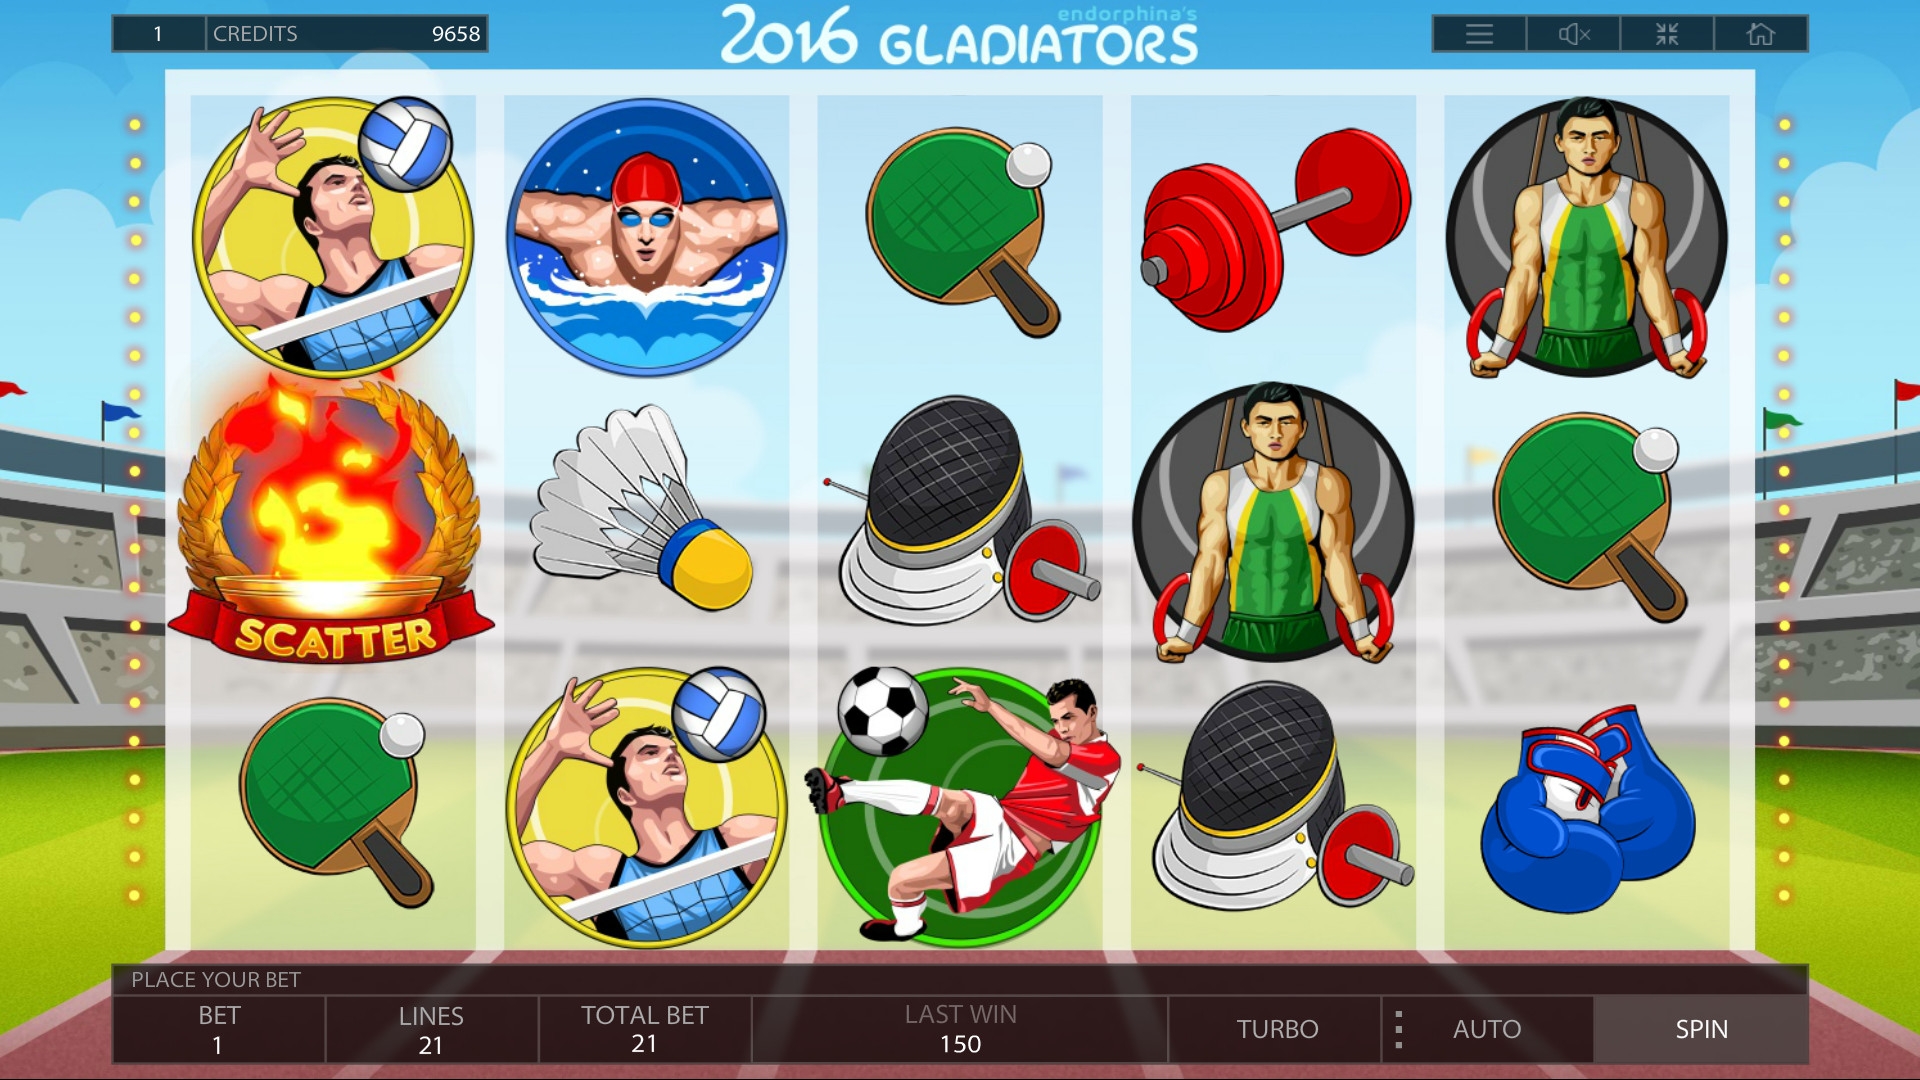 2016 Gladiators (2016 Gladiators) from category Slots